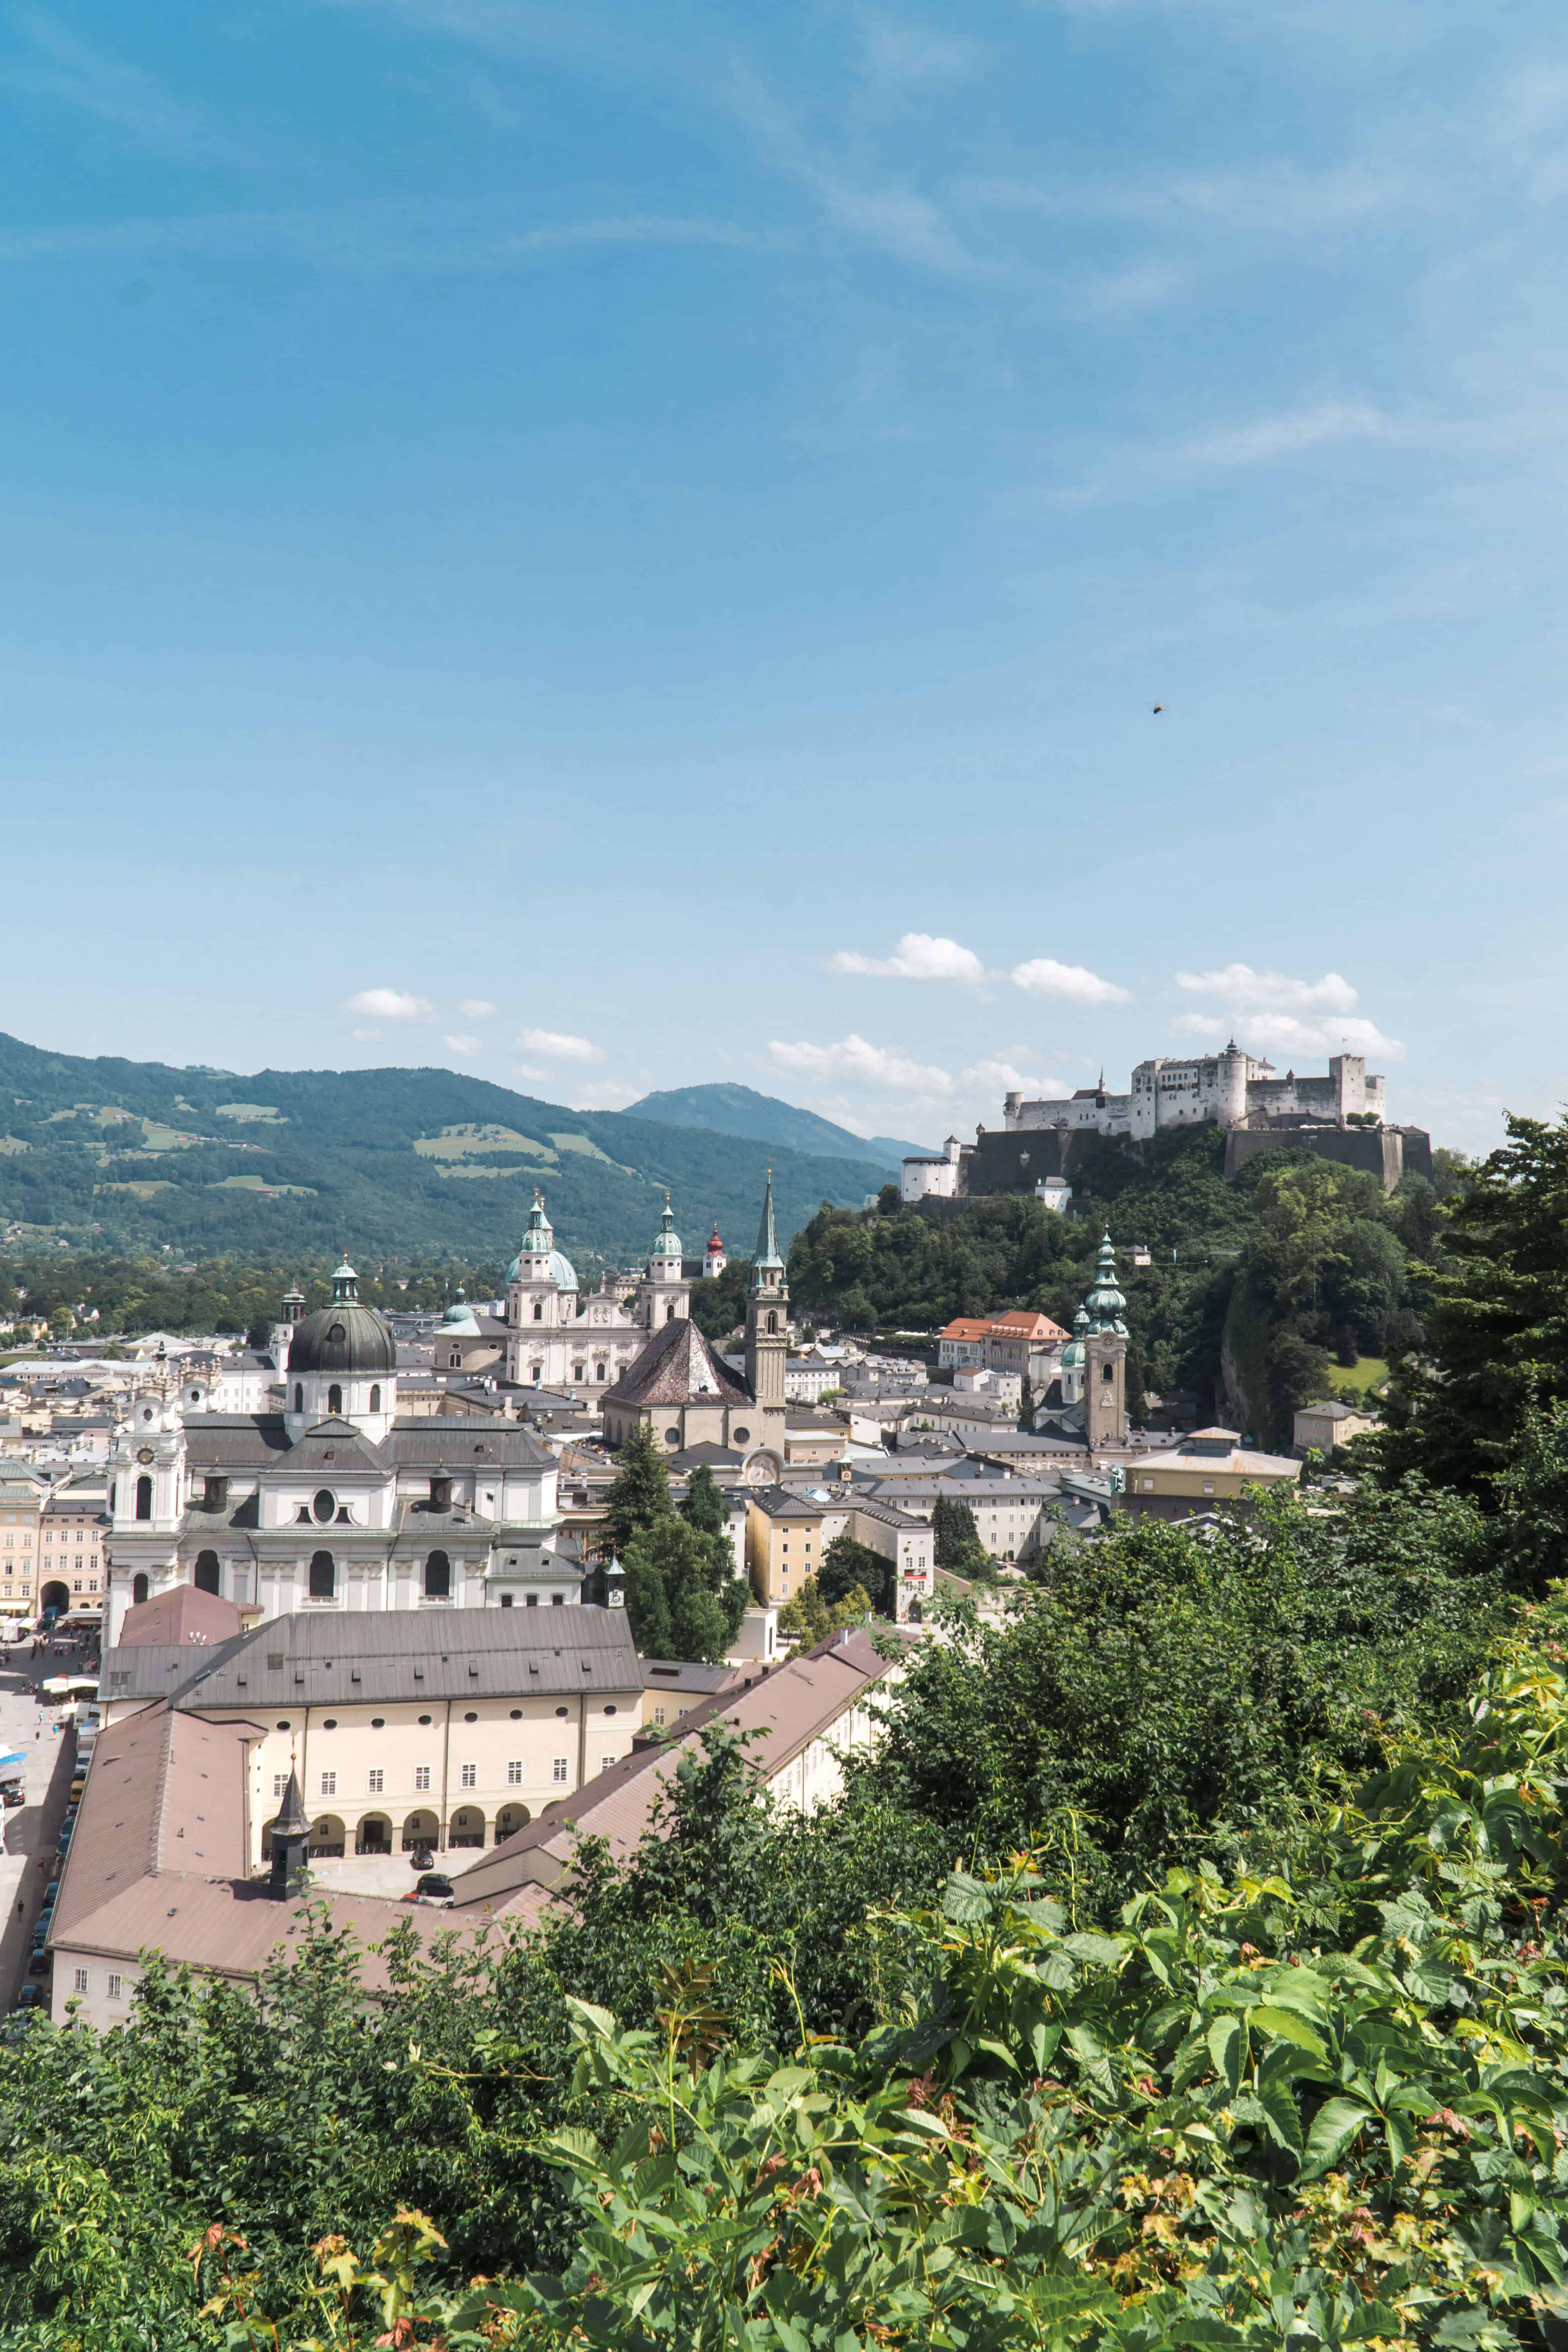 Staying at Hotel Schloss Mönchstein in Salzburg Austria | Salzburg Fortress | The Republic of Rose | #Salzburg #Austria #Europe #Travel #SoundofMusic